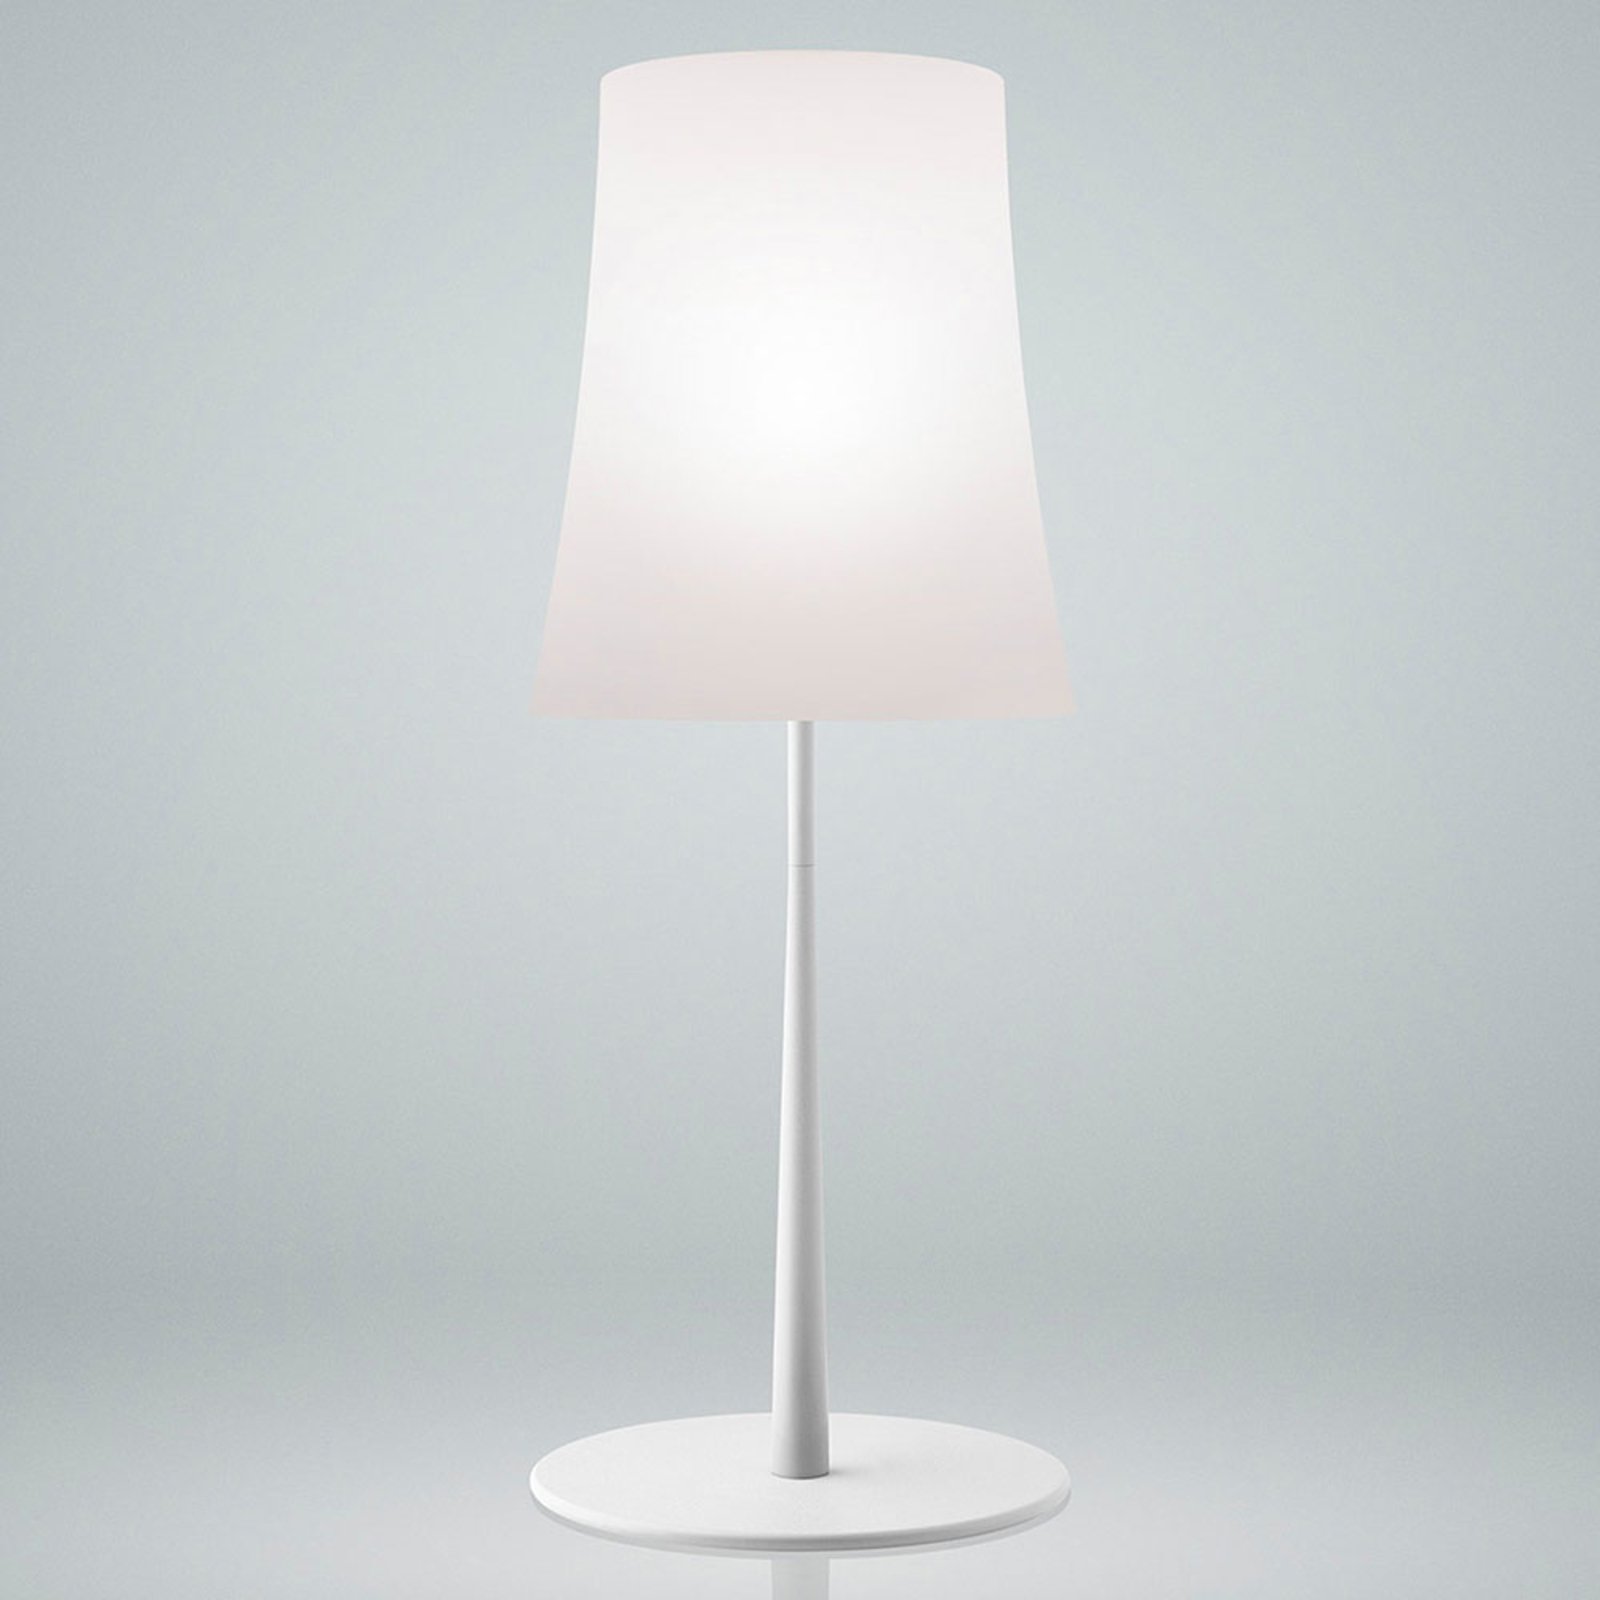 Foscarini Birdie Easy Grande table lamp white